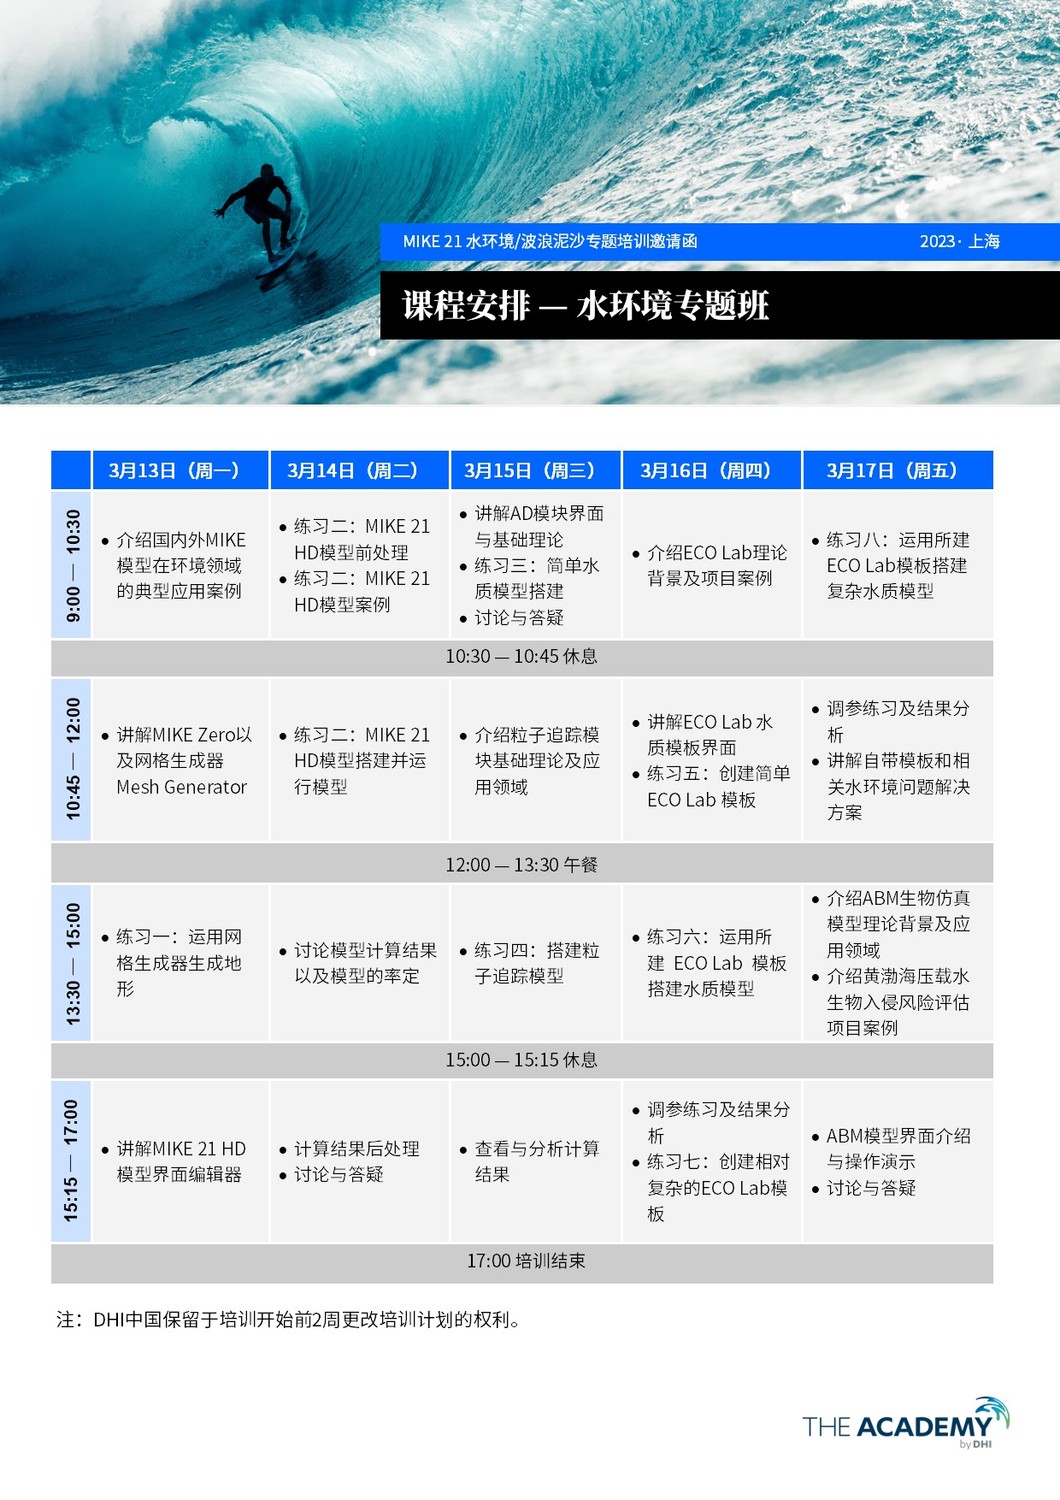 DHI MIKE 21专题培训邀请函_2022.3.13-3.17_上海--zgy .jpg